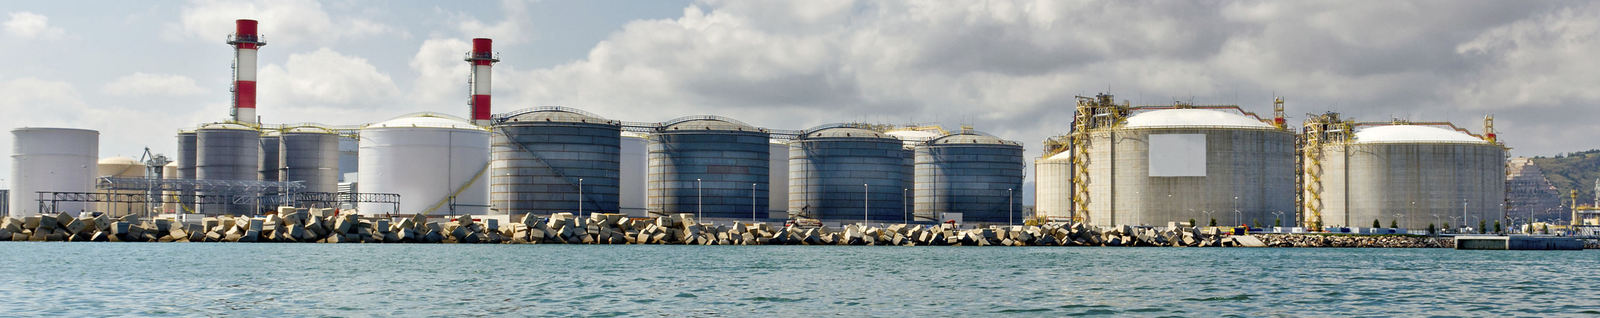 Dunkerque LNG terminal